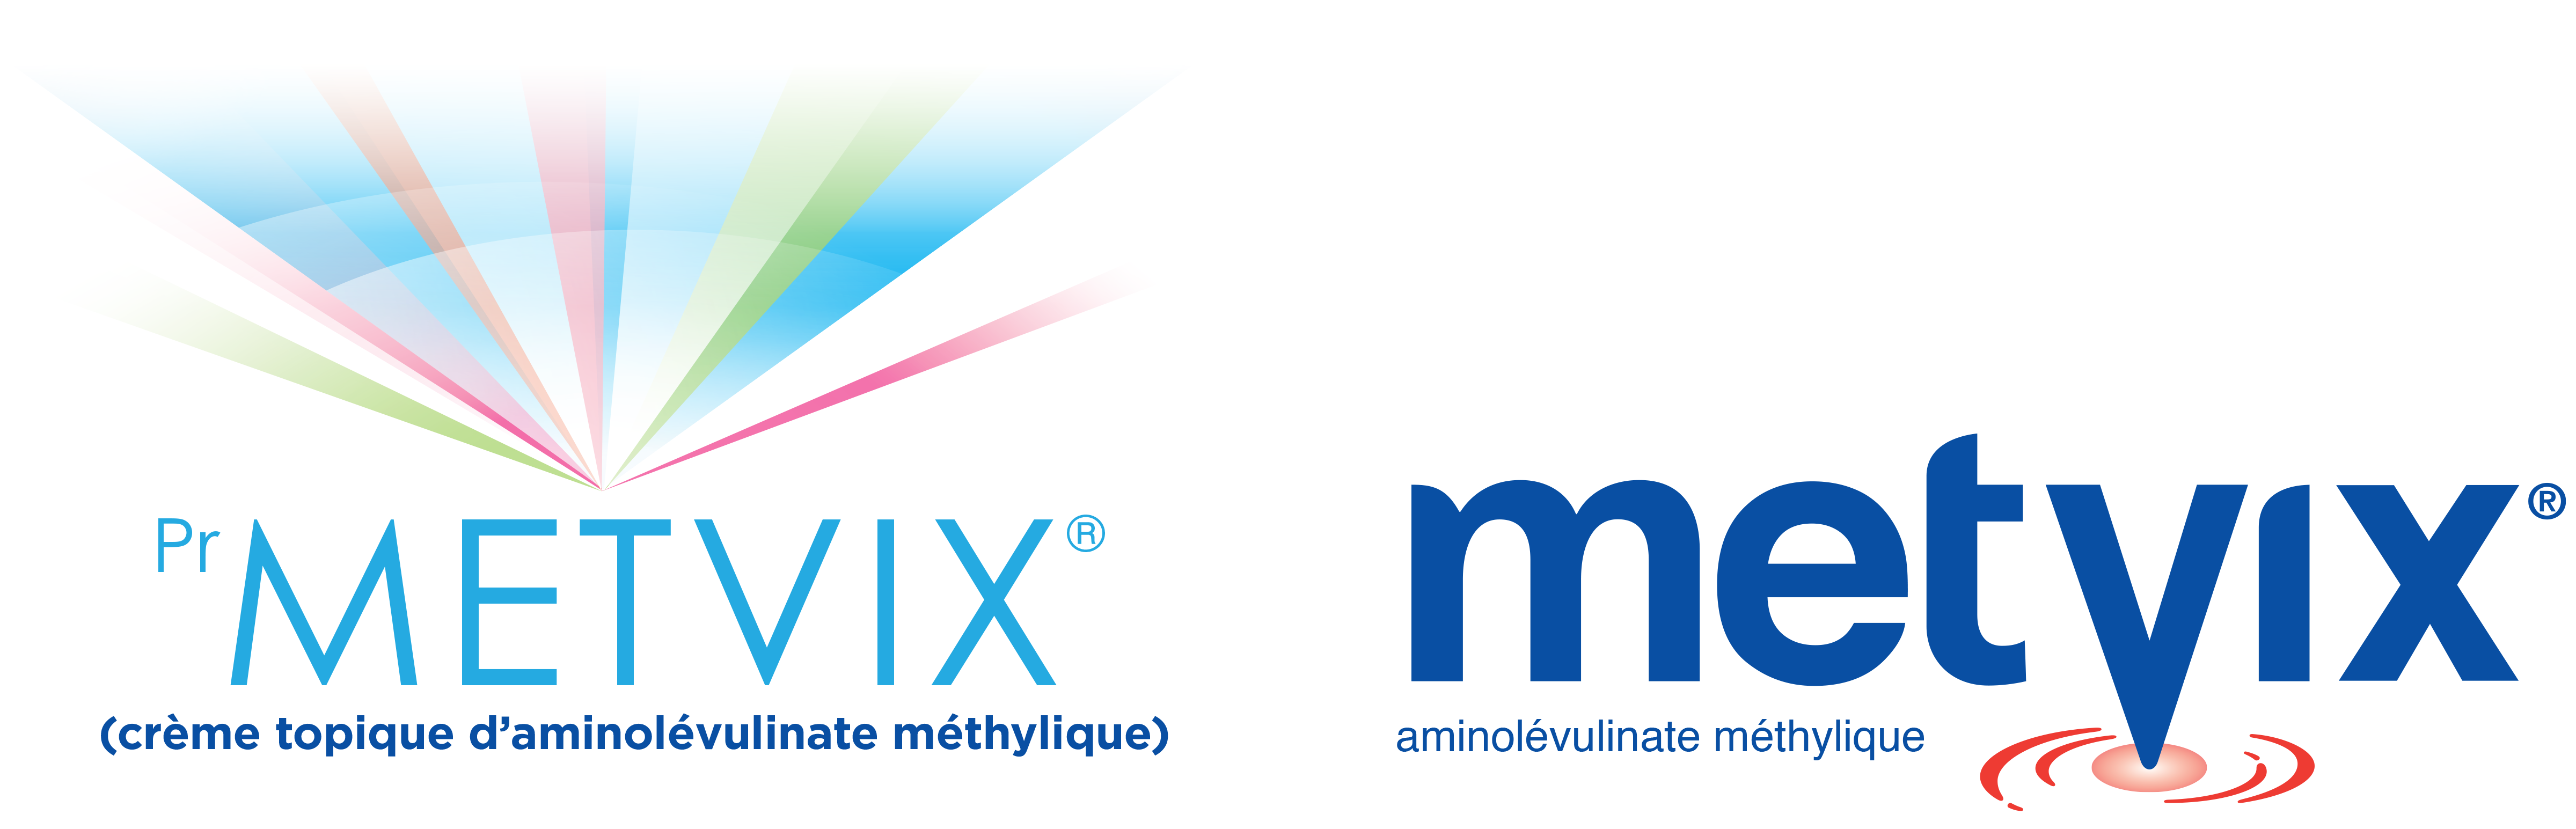 Image of metvix logo